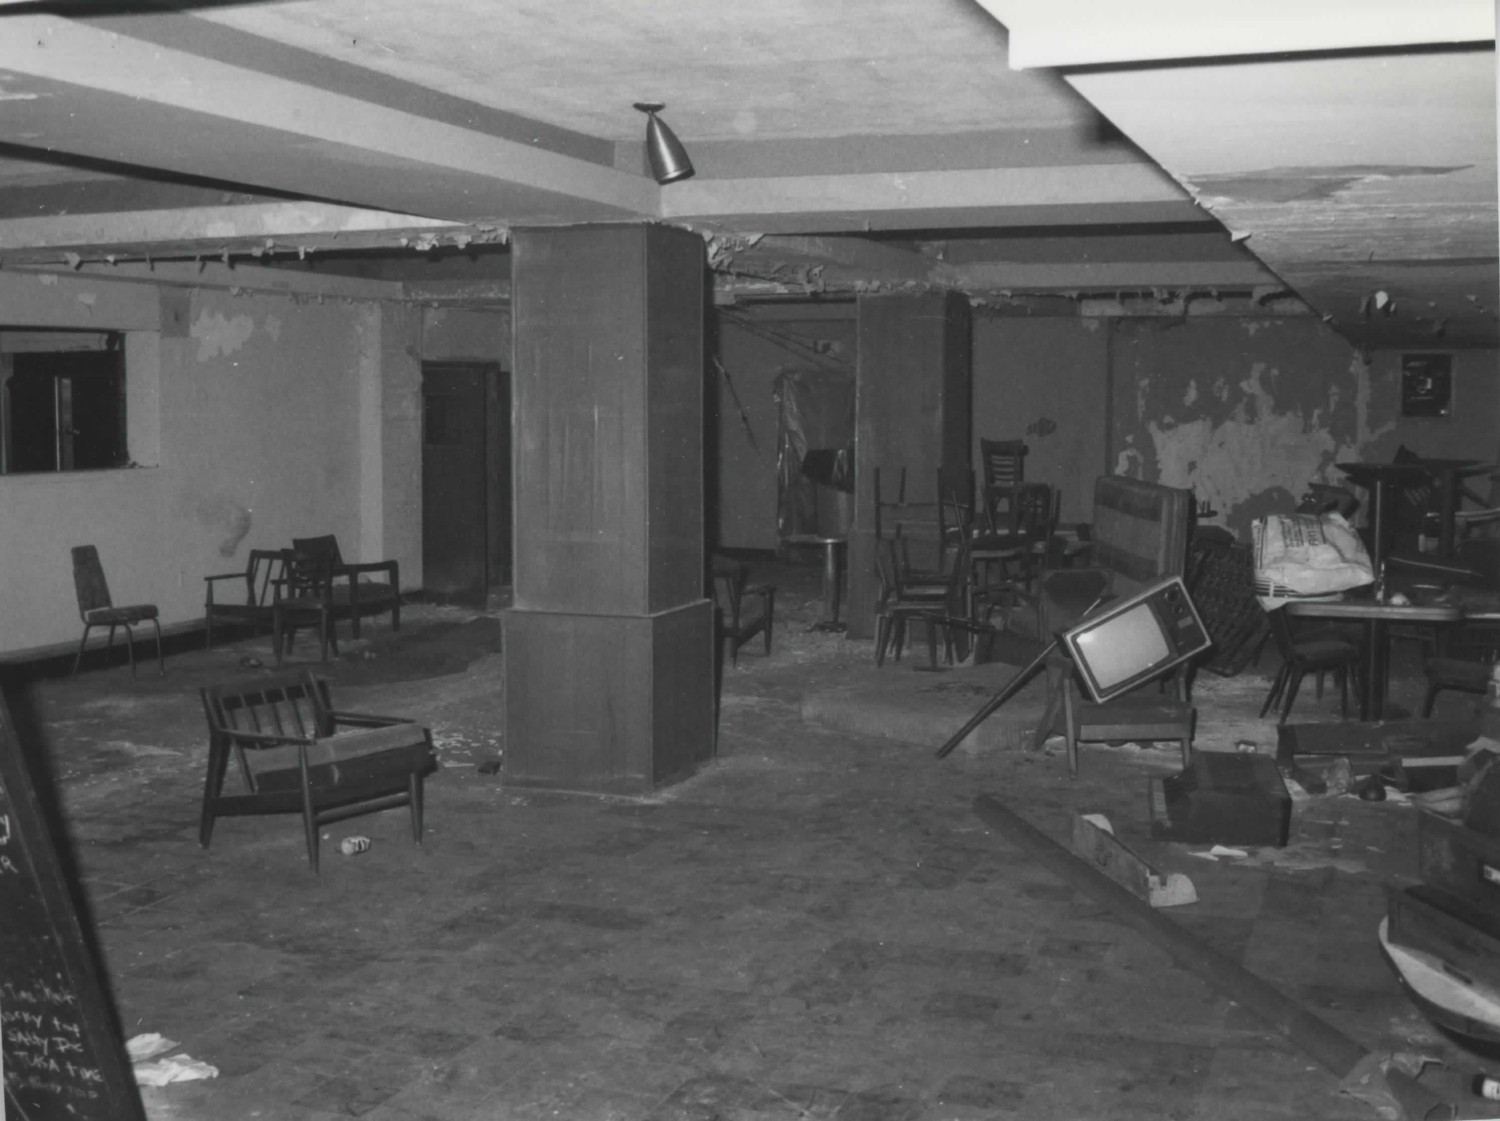 Marting Hotel, Ironton Ohio Ballroom - second floor (mezzanine) level (1998)